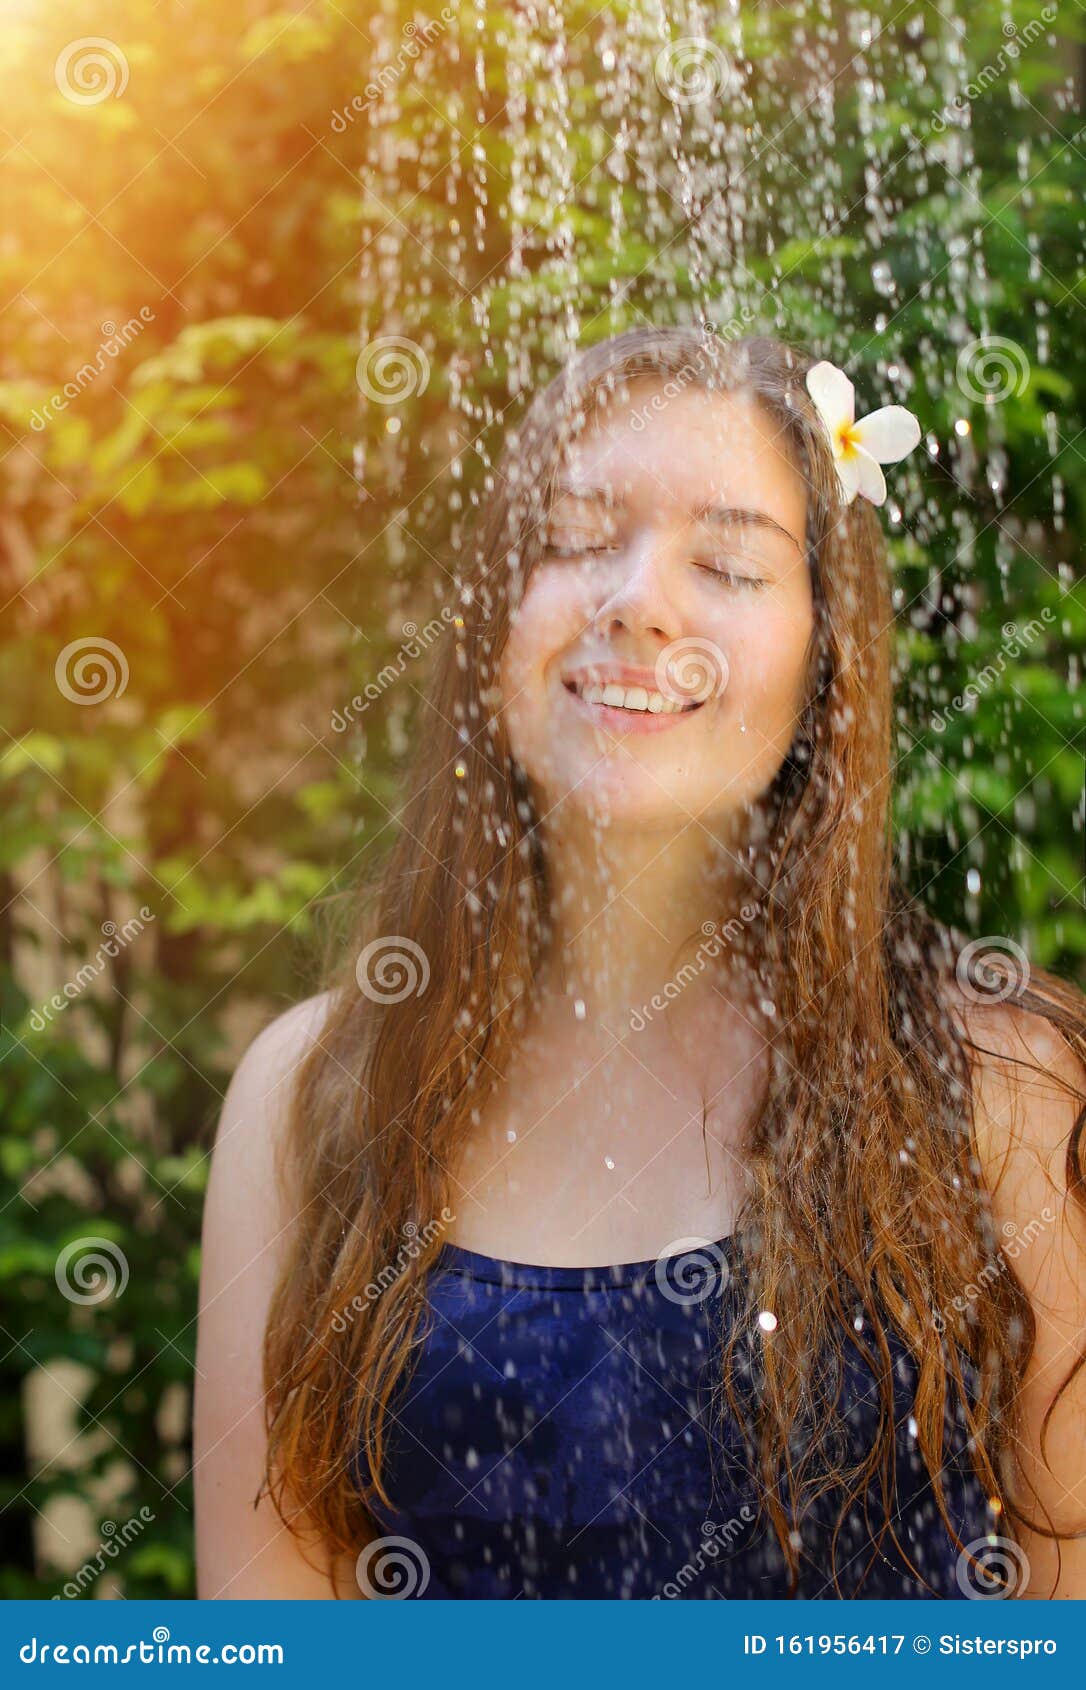 shower Taking outside a